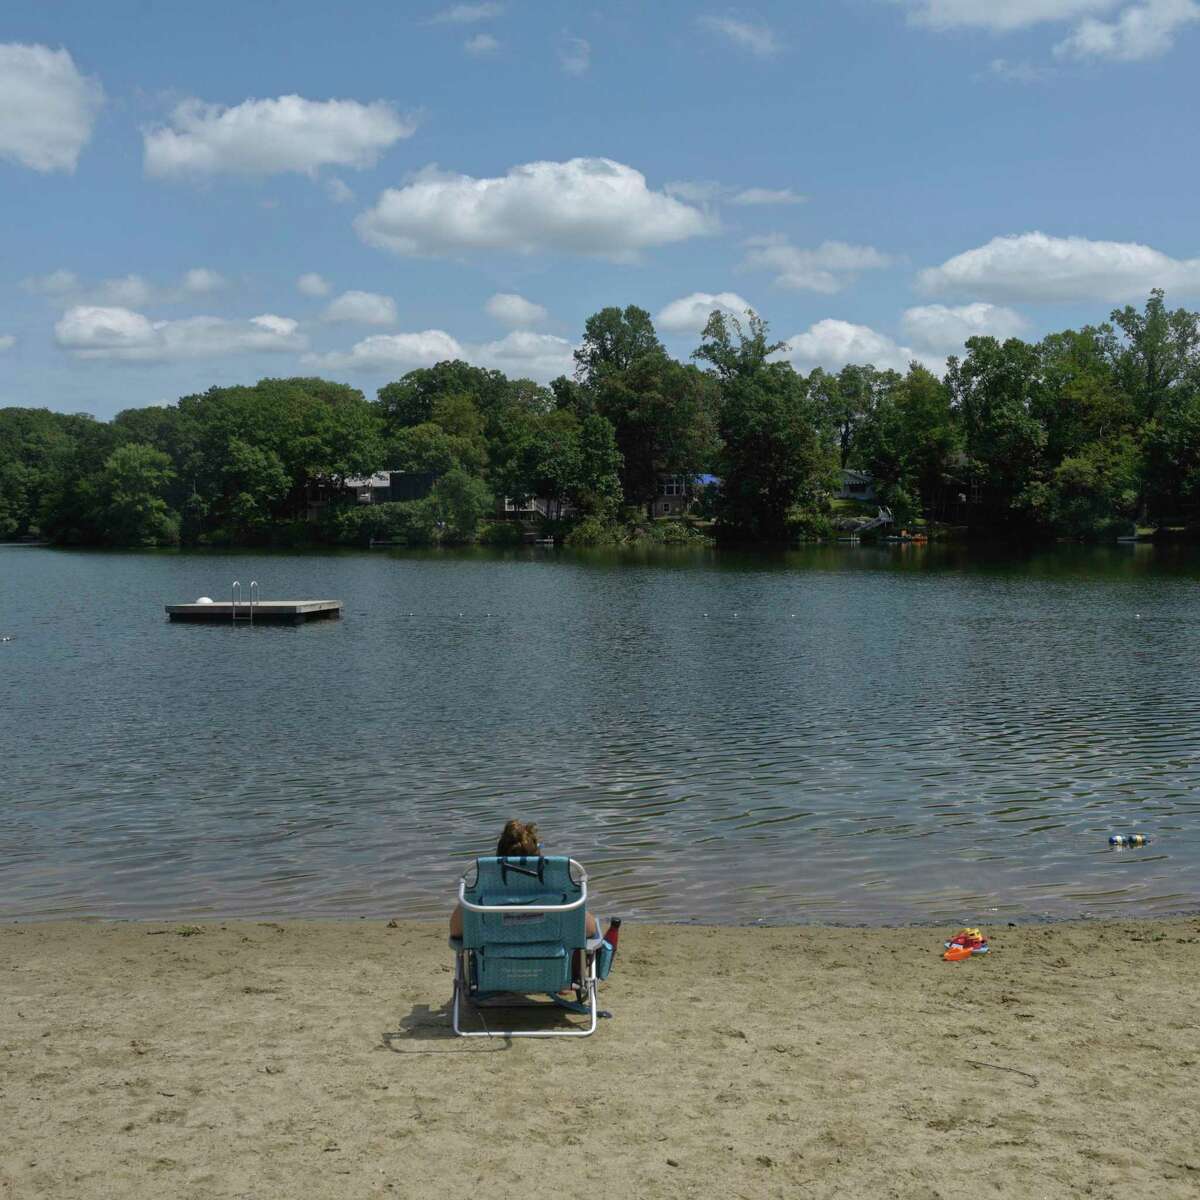 A woman sits on the beach in the Lake Waubeeka community in Danbury, Conn. August 12, 2020.